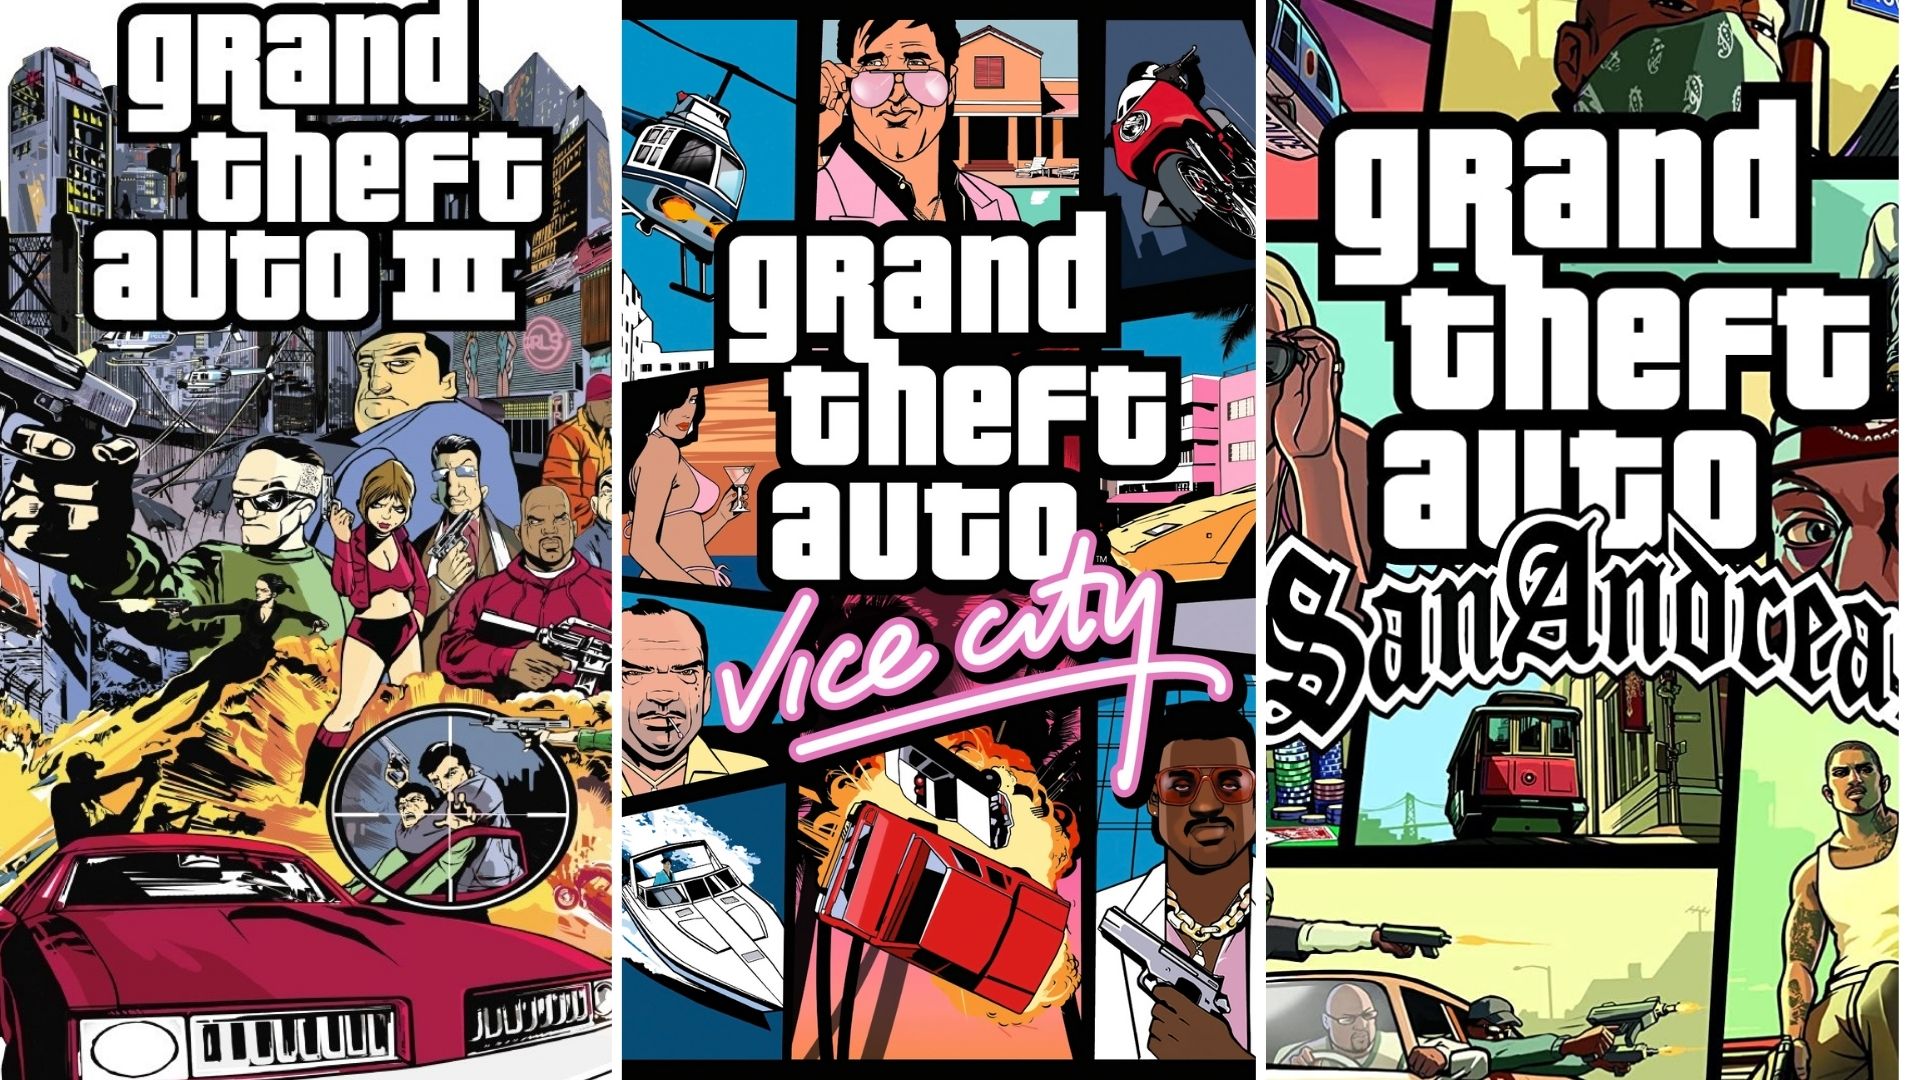 Grand Theft Auto: Vice City gets a new HD remaster via GTA mod